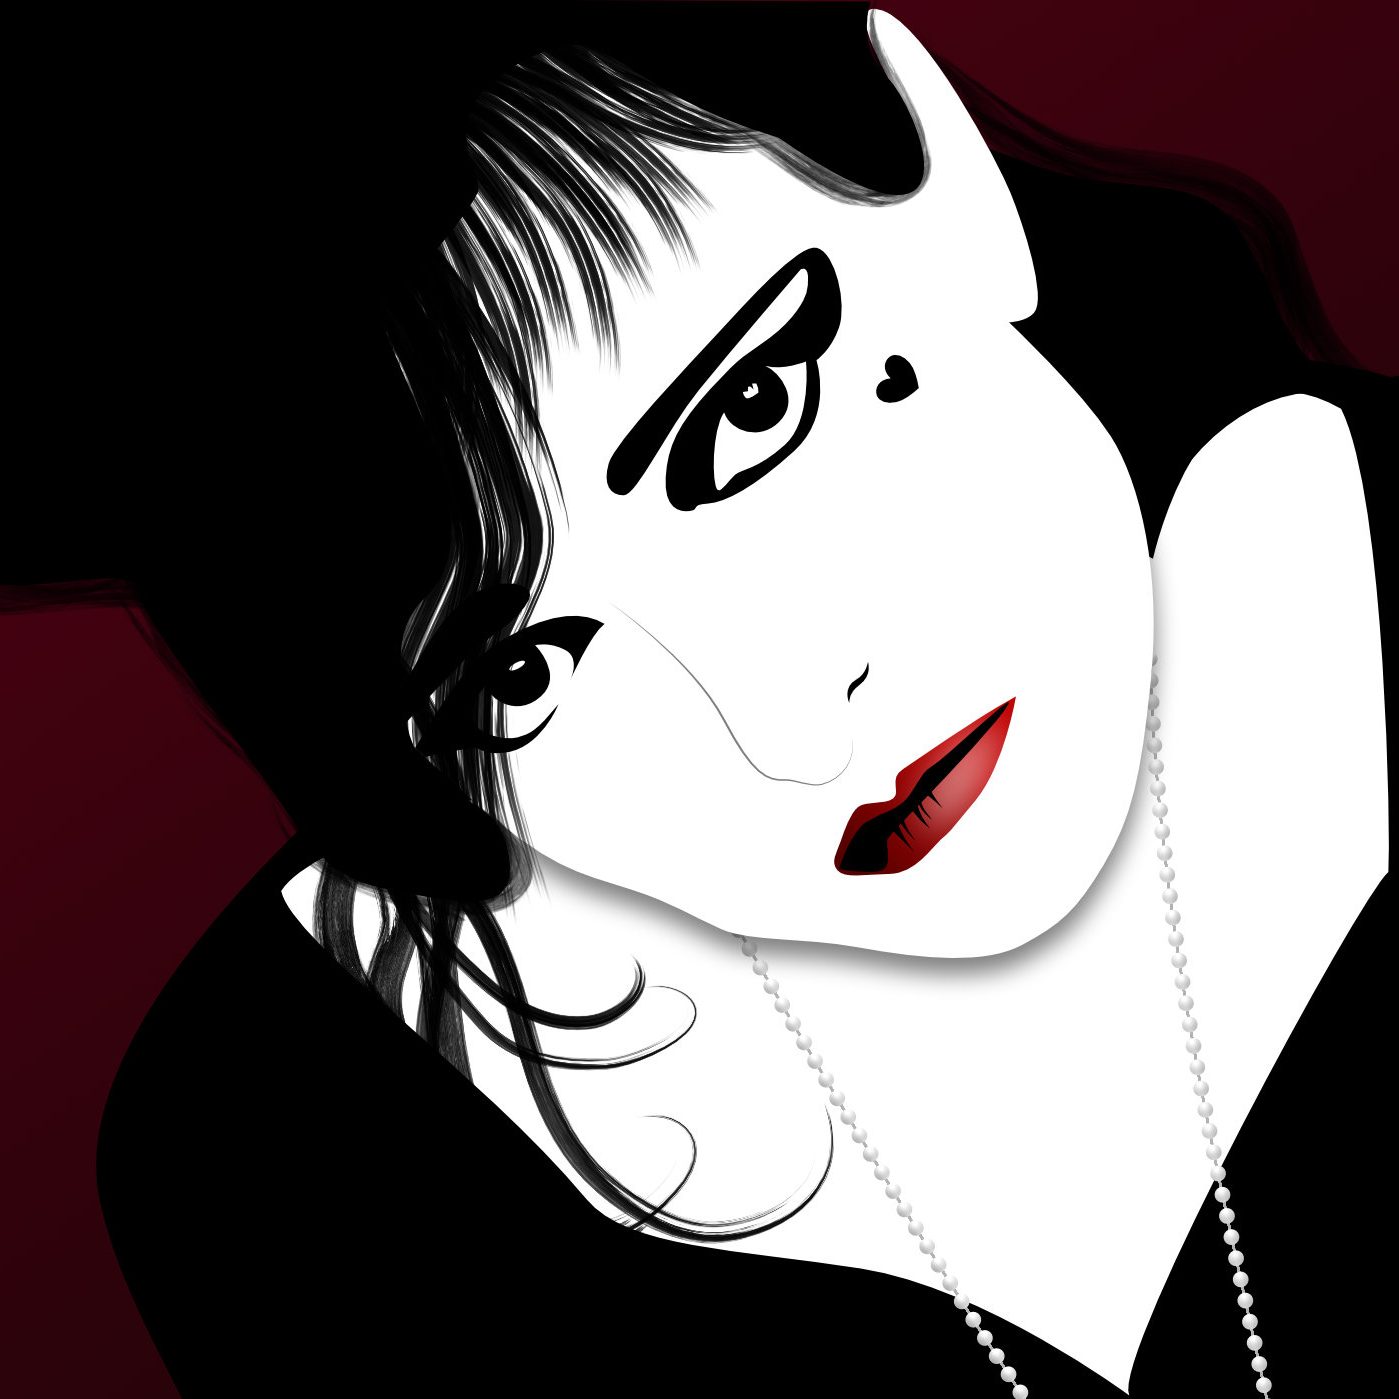 Siouxsie!